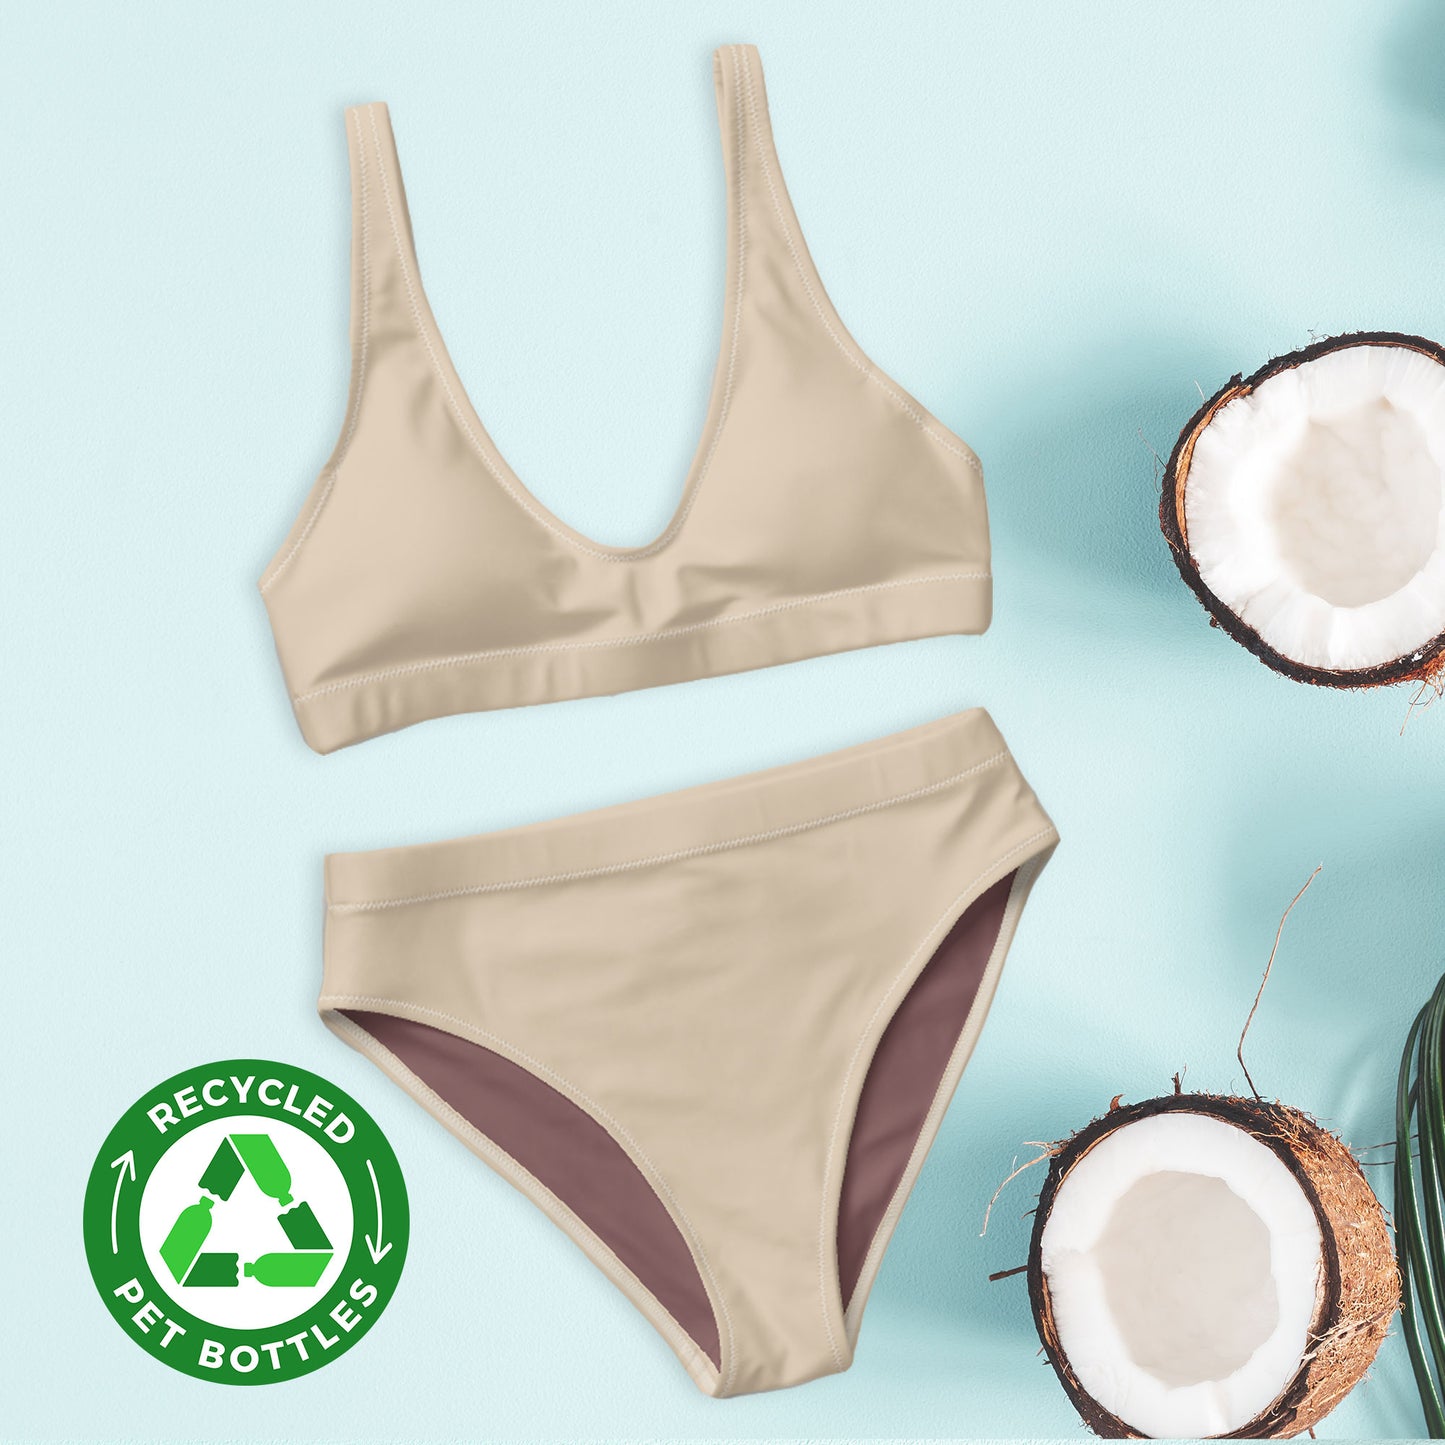 Almond creme, beige Recycled high-waisted bikini set